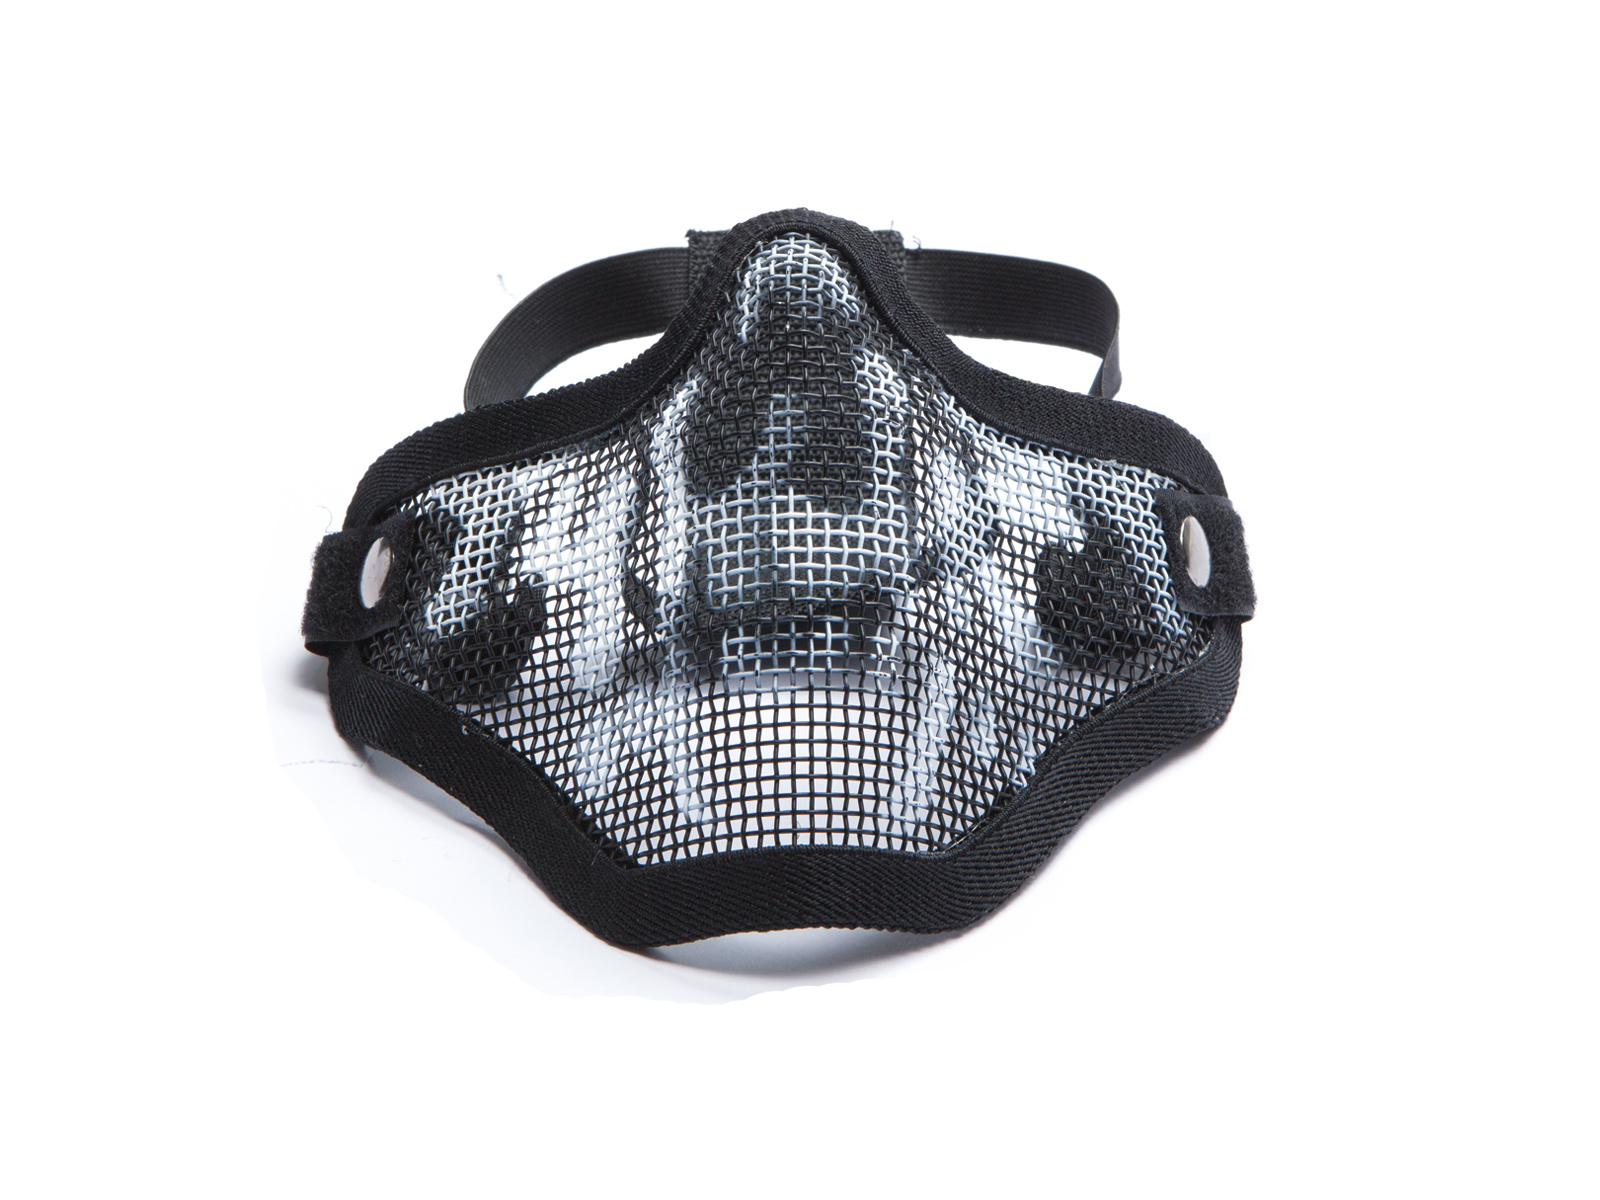 ASG Strike Systems Mesh Mask Masque Mesh avec tête de mort - BK